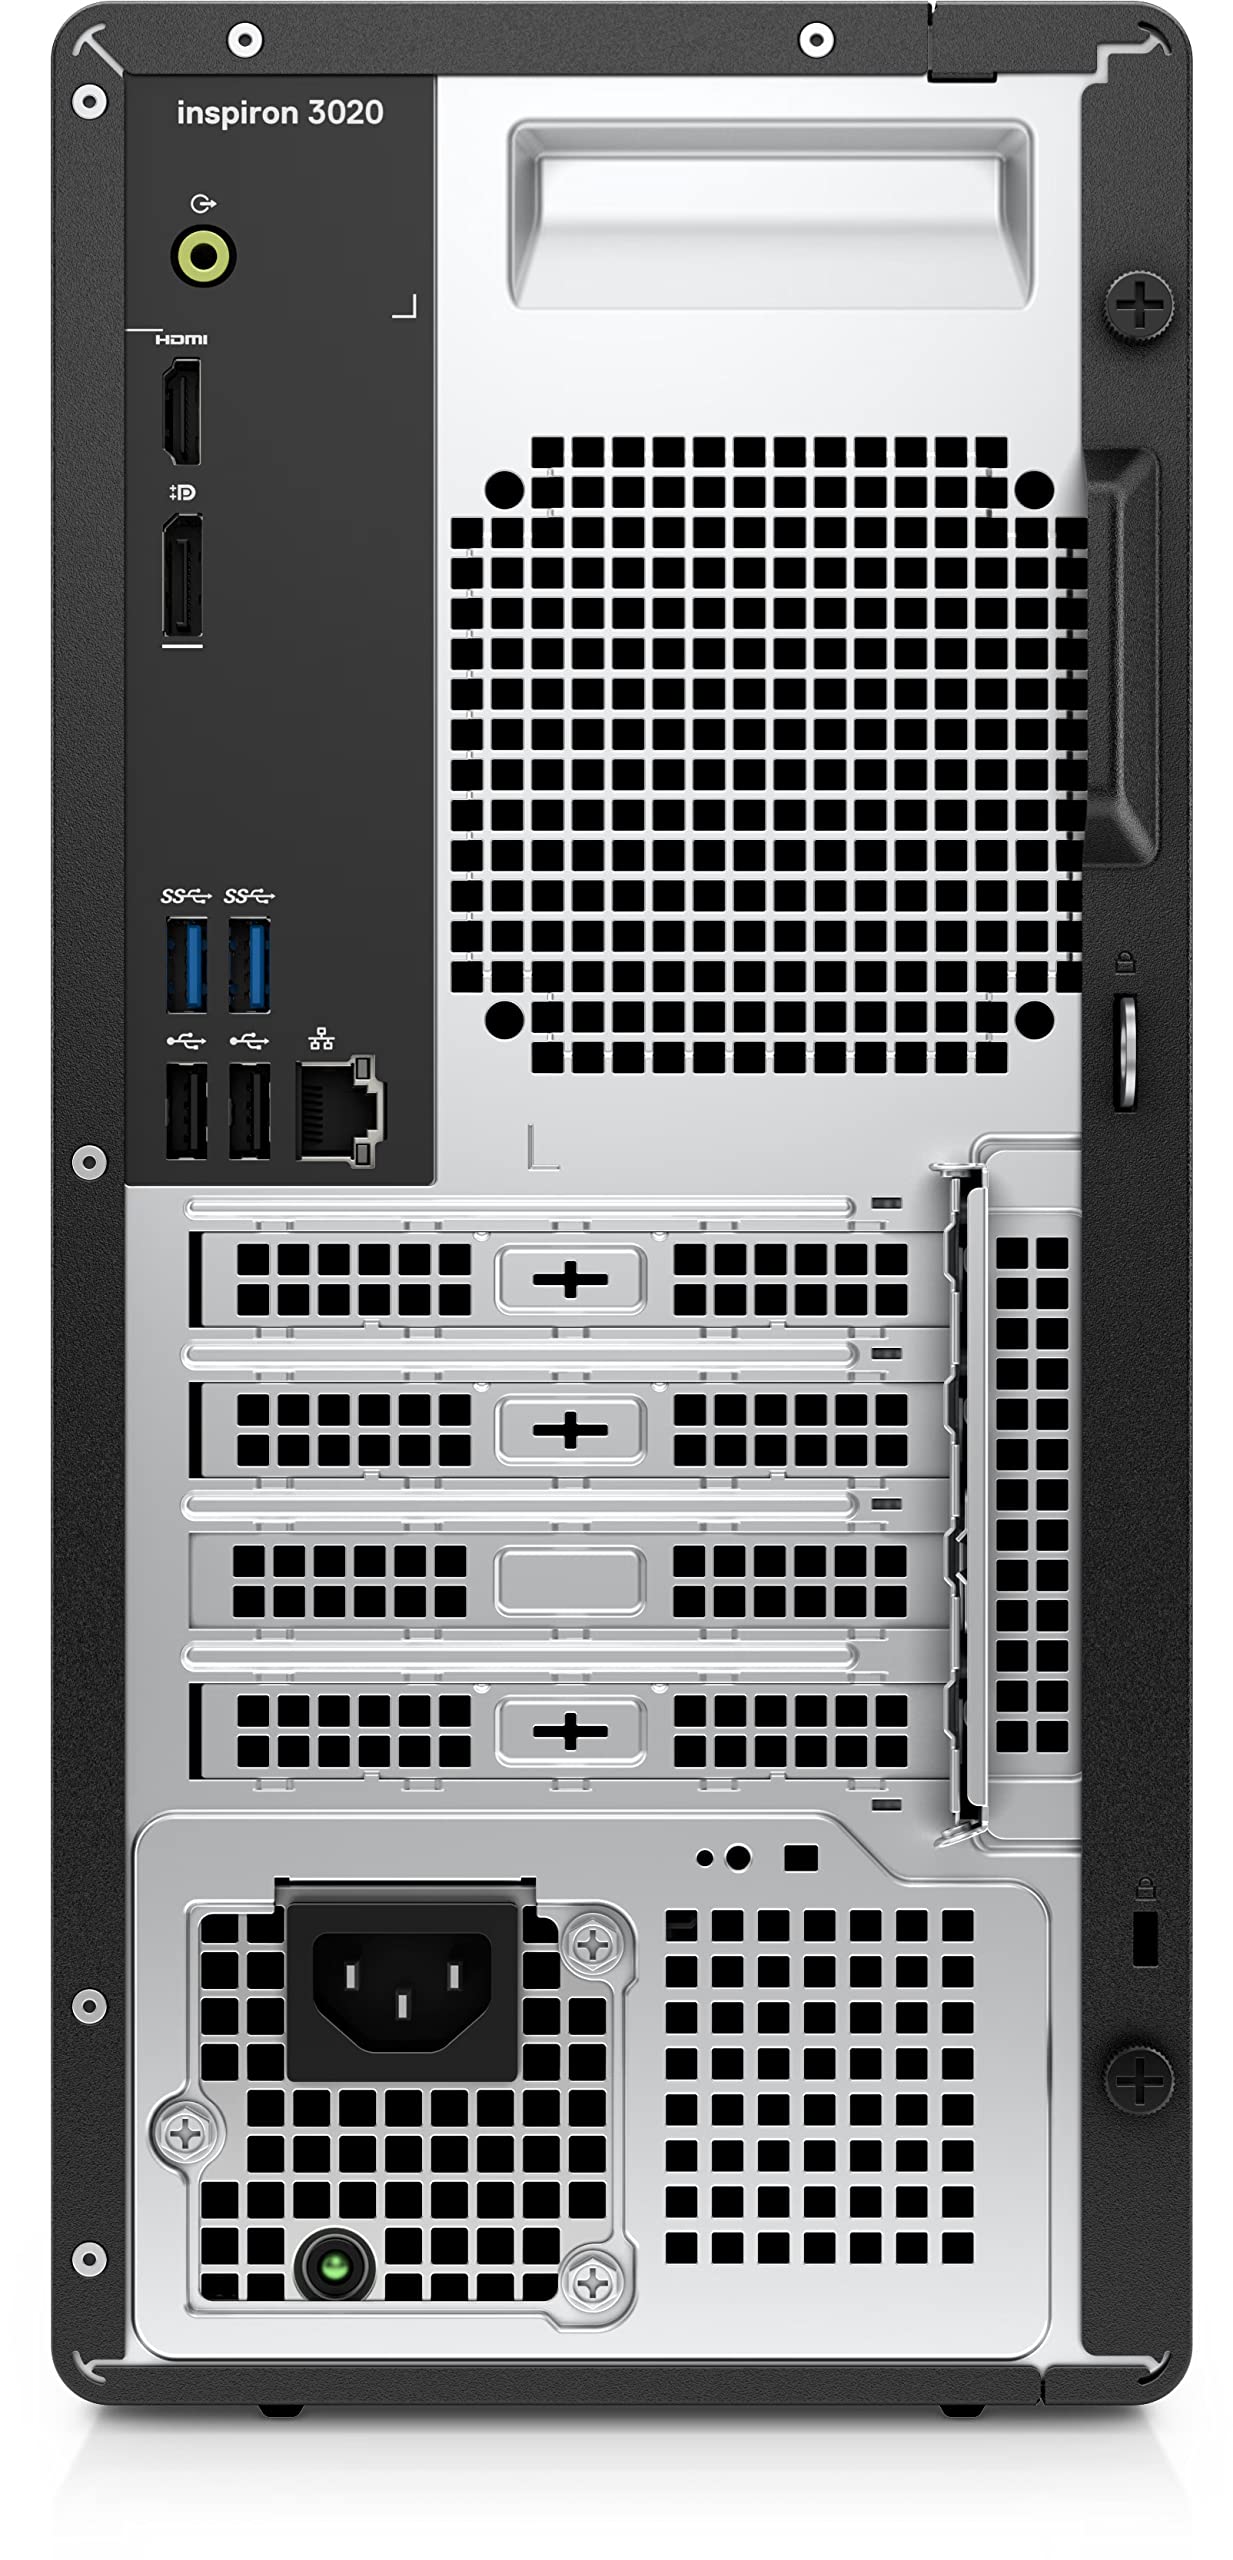 Dell Inspiron 3020 Tower Desktop Computer - 13th Gen Intel Core i5-13400 10-Core up to 4.60 GHz Processor, 32GB DDR4 RAM, 1TB NVMe SSD, Intel UHD Graphics 730, DVD+RW, Windows 11 Home